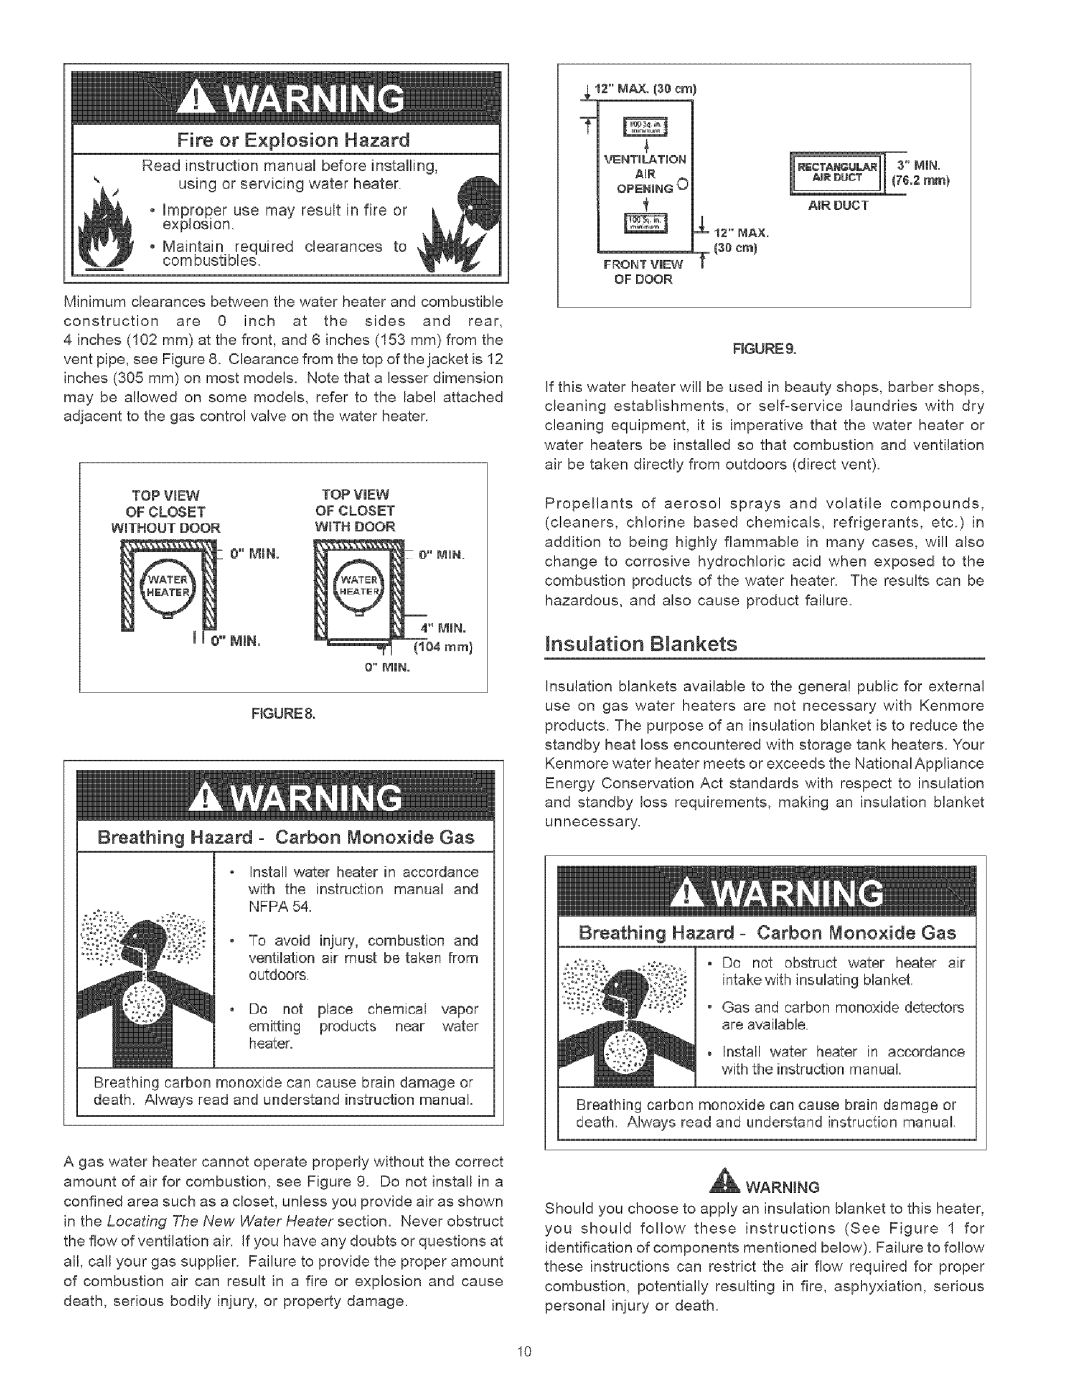 Kenmore 153336566 Insulation B_ankets, Breathing Hazard = Carbon Monoxide Gas, Breathing Hazard - Carbon Monoxide Gas 